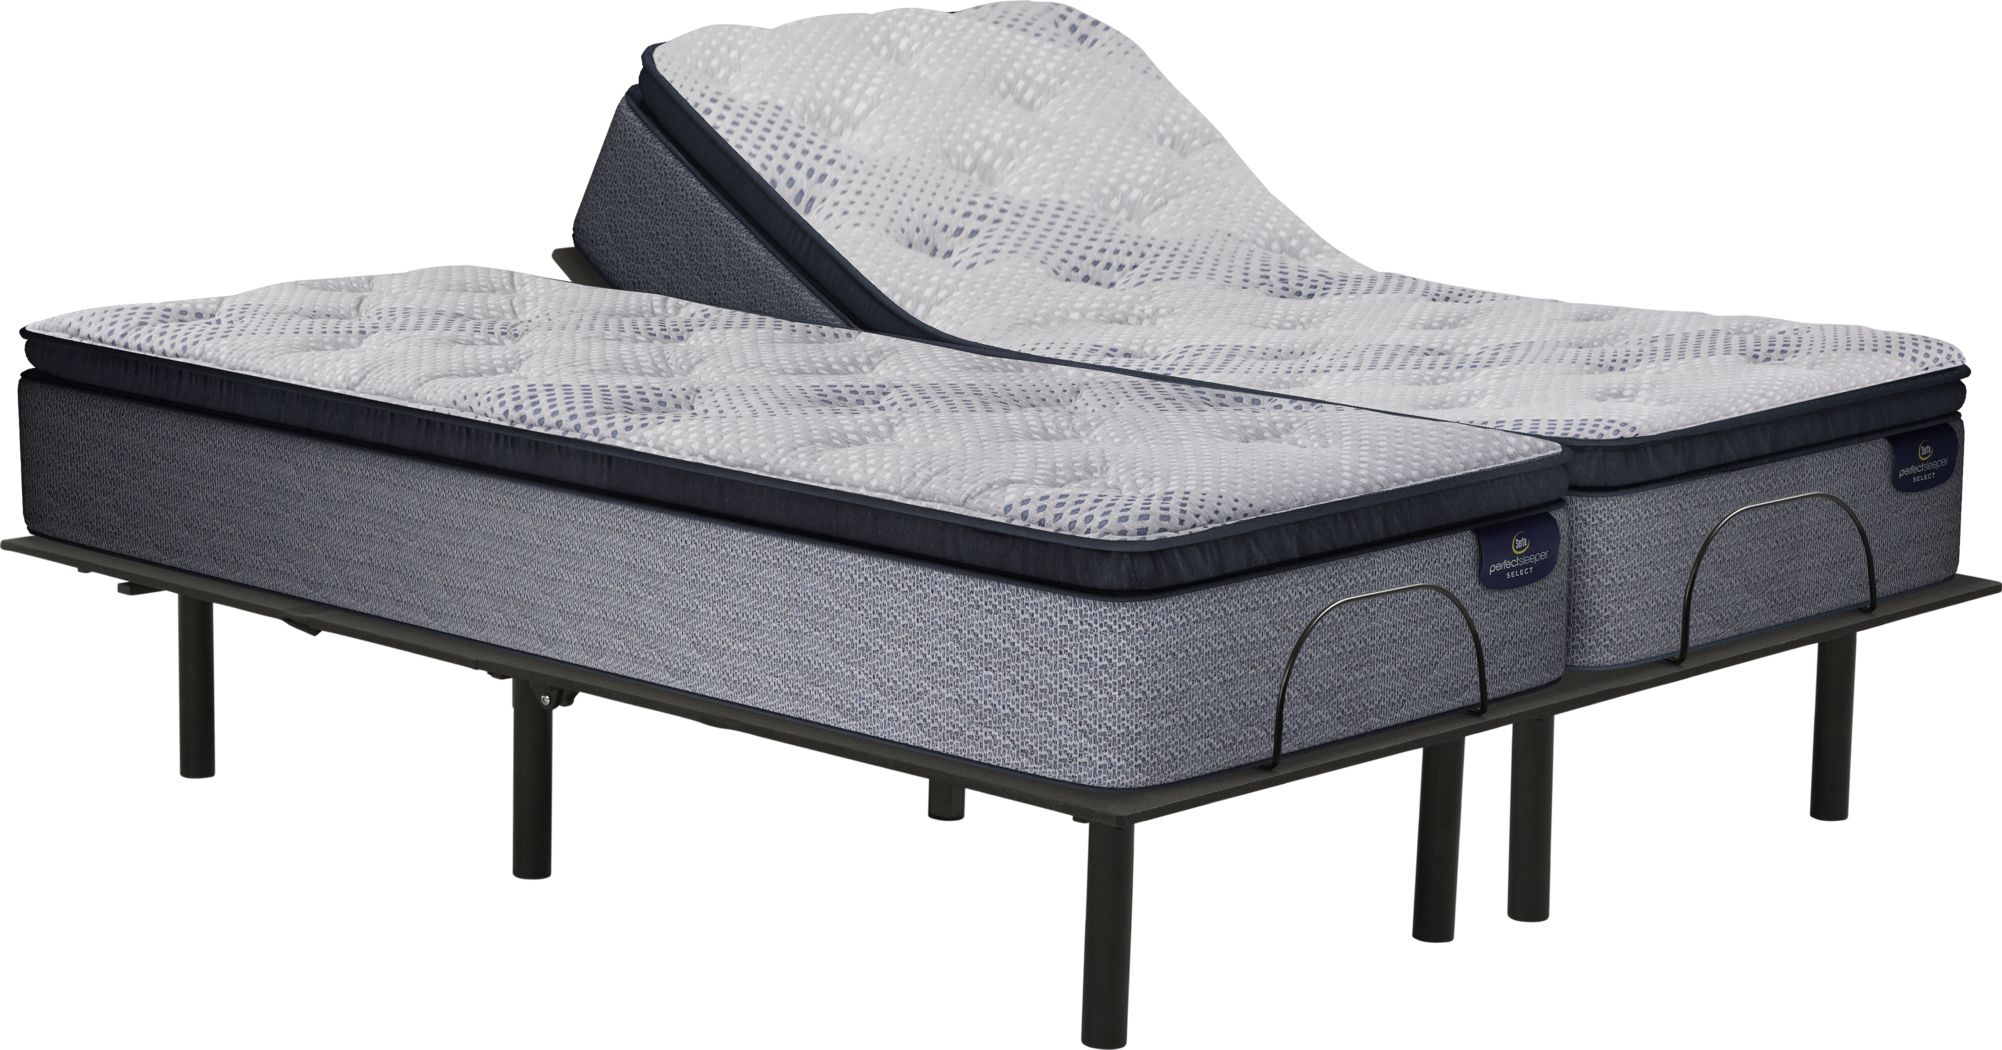 serta groomsby king size perfect sleeper mattress